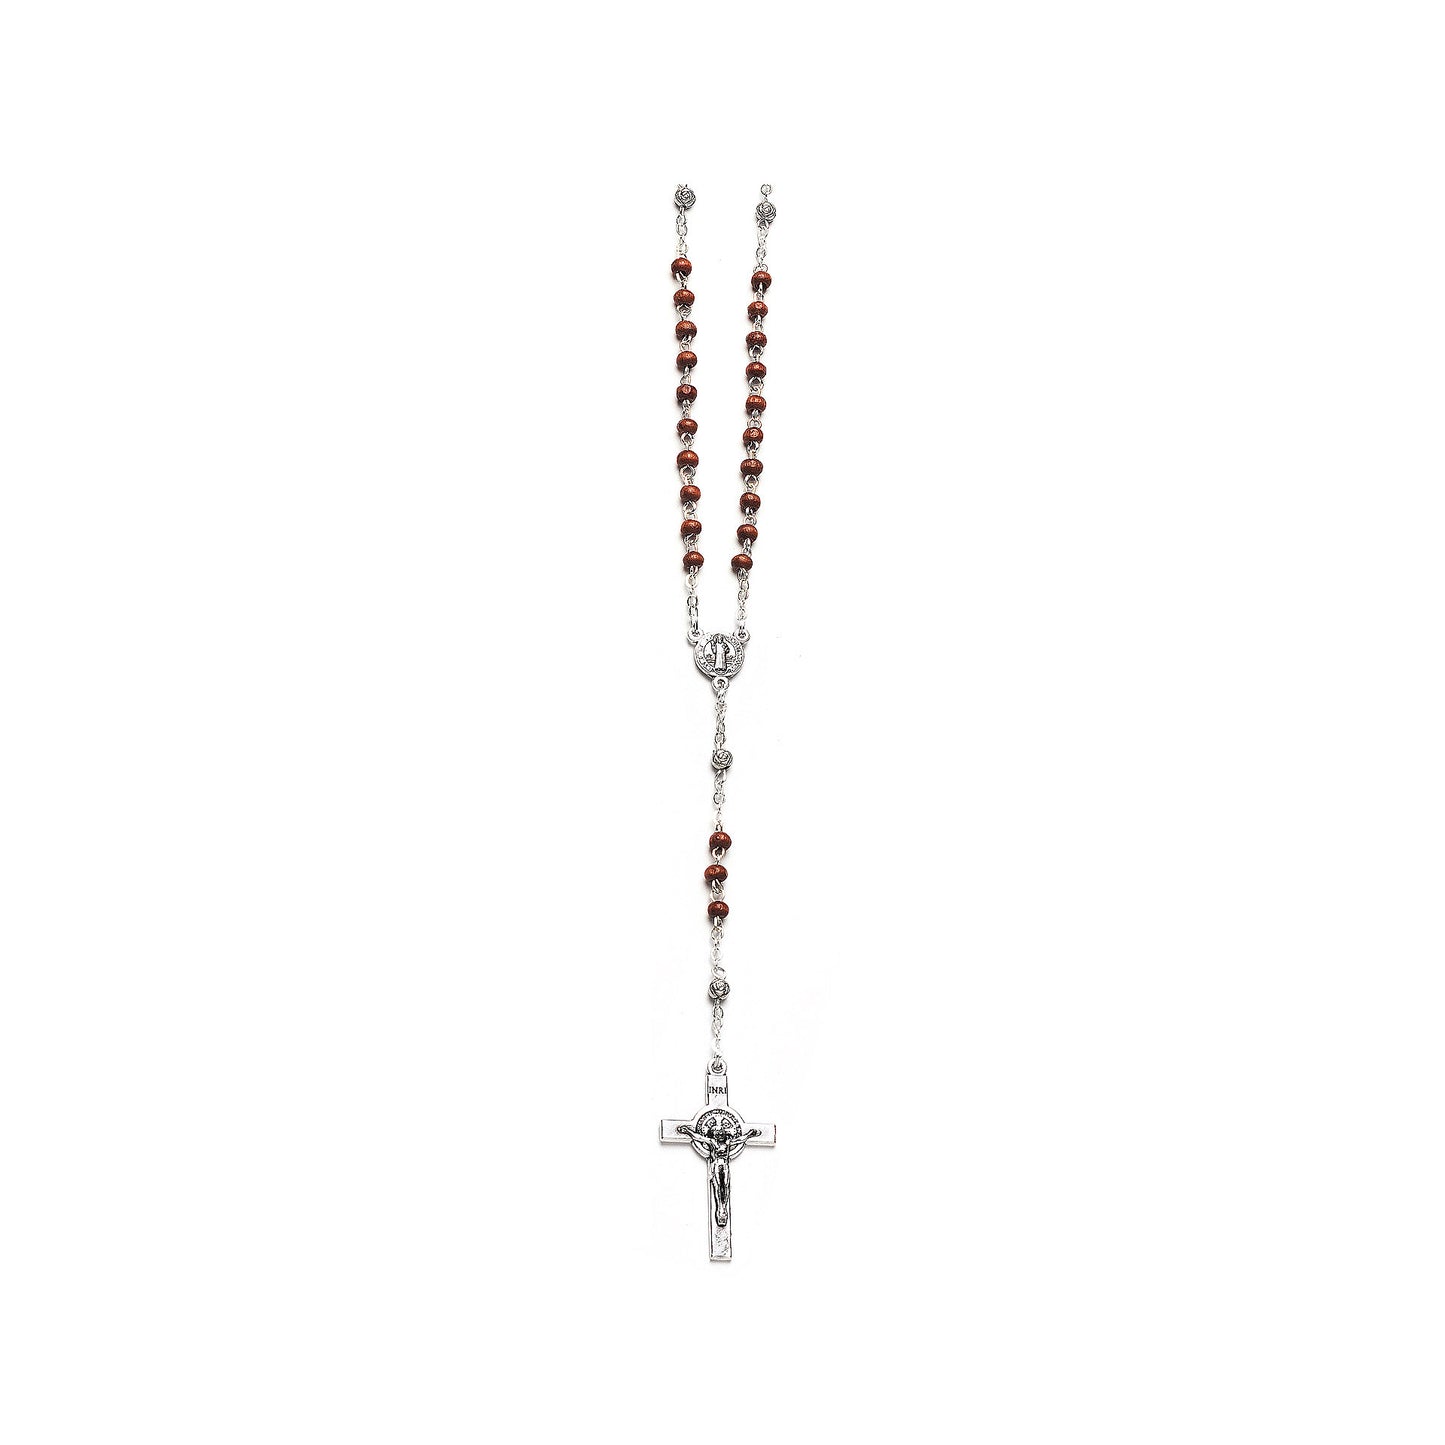 Saint Benedict Rosary simple and elegant